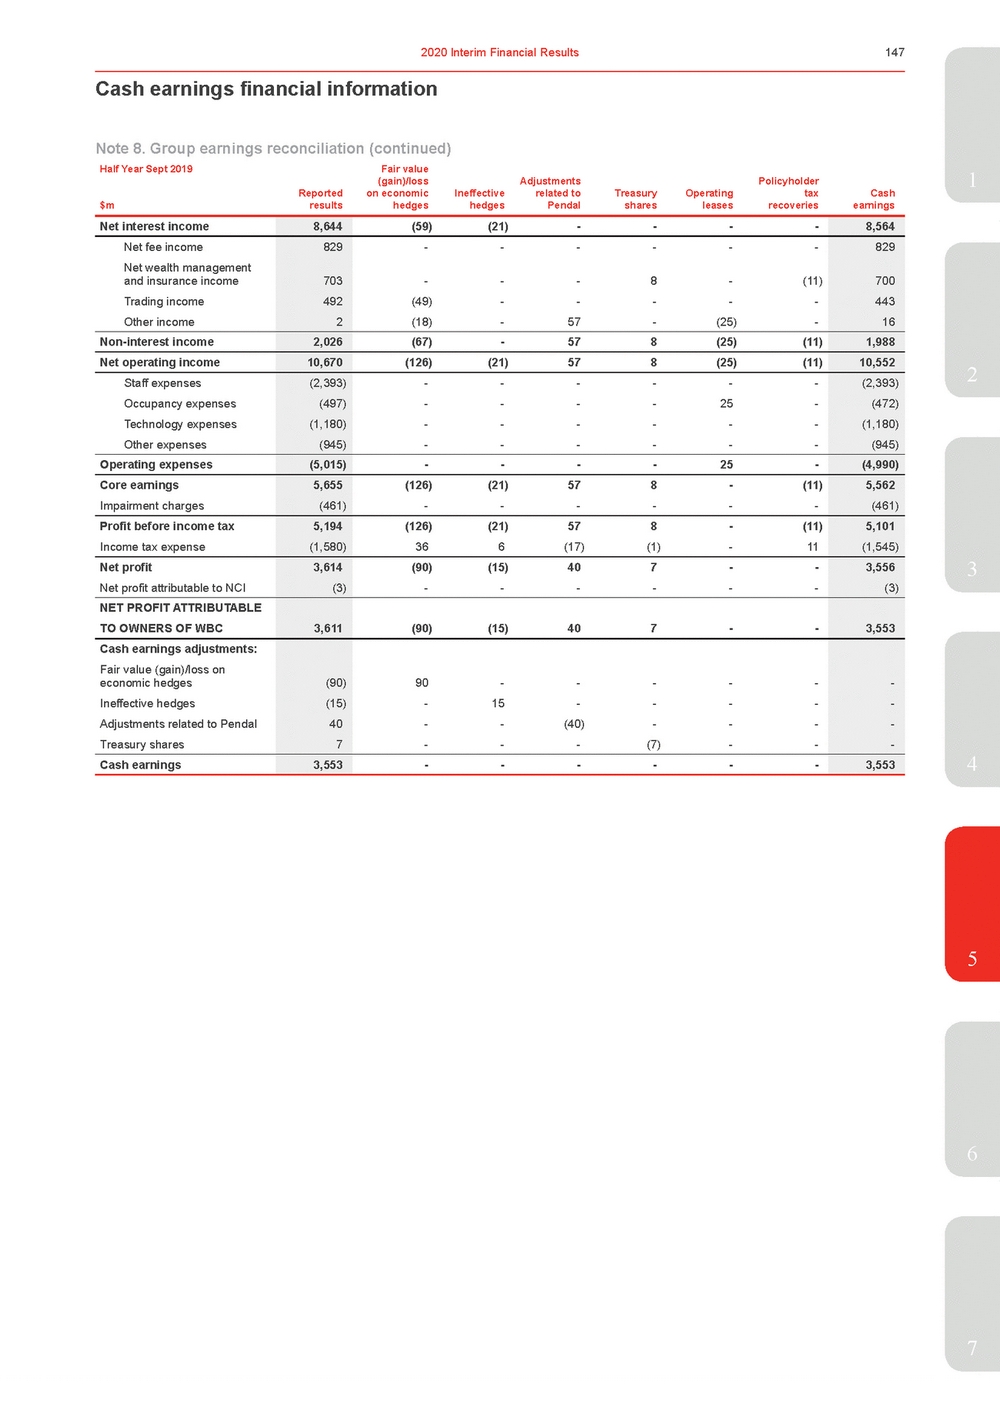 11676-3-ex1_westpac 2020 interim financial results announcement_page_152.jpg